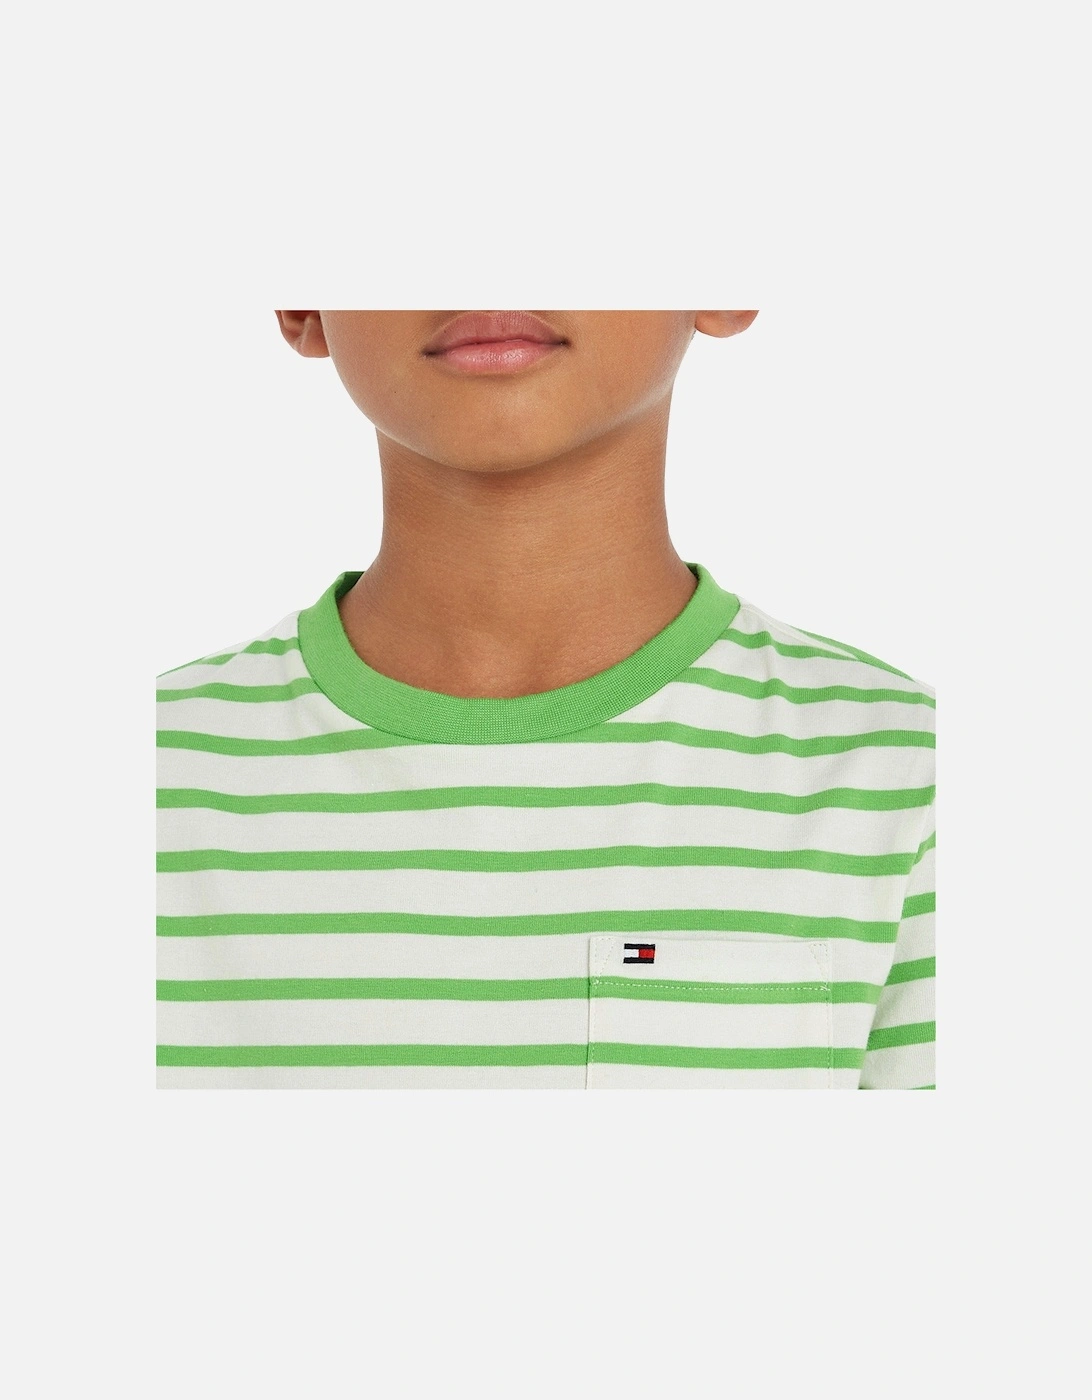 Juniors Striped Pocket T-Shirt (Lime)